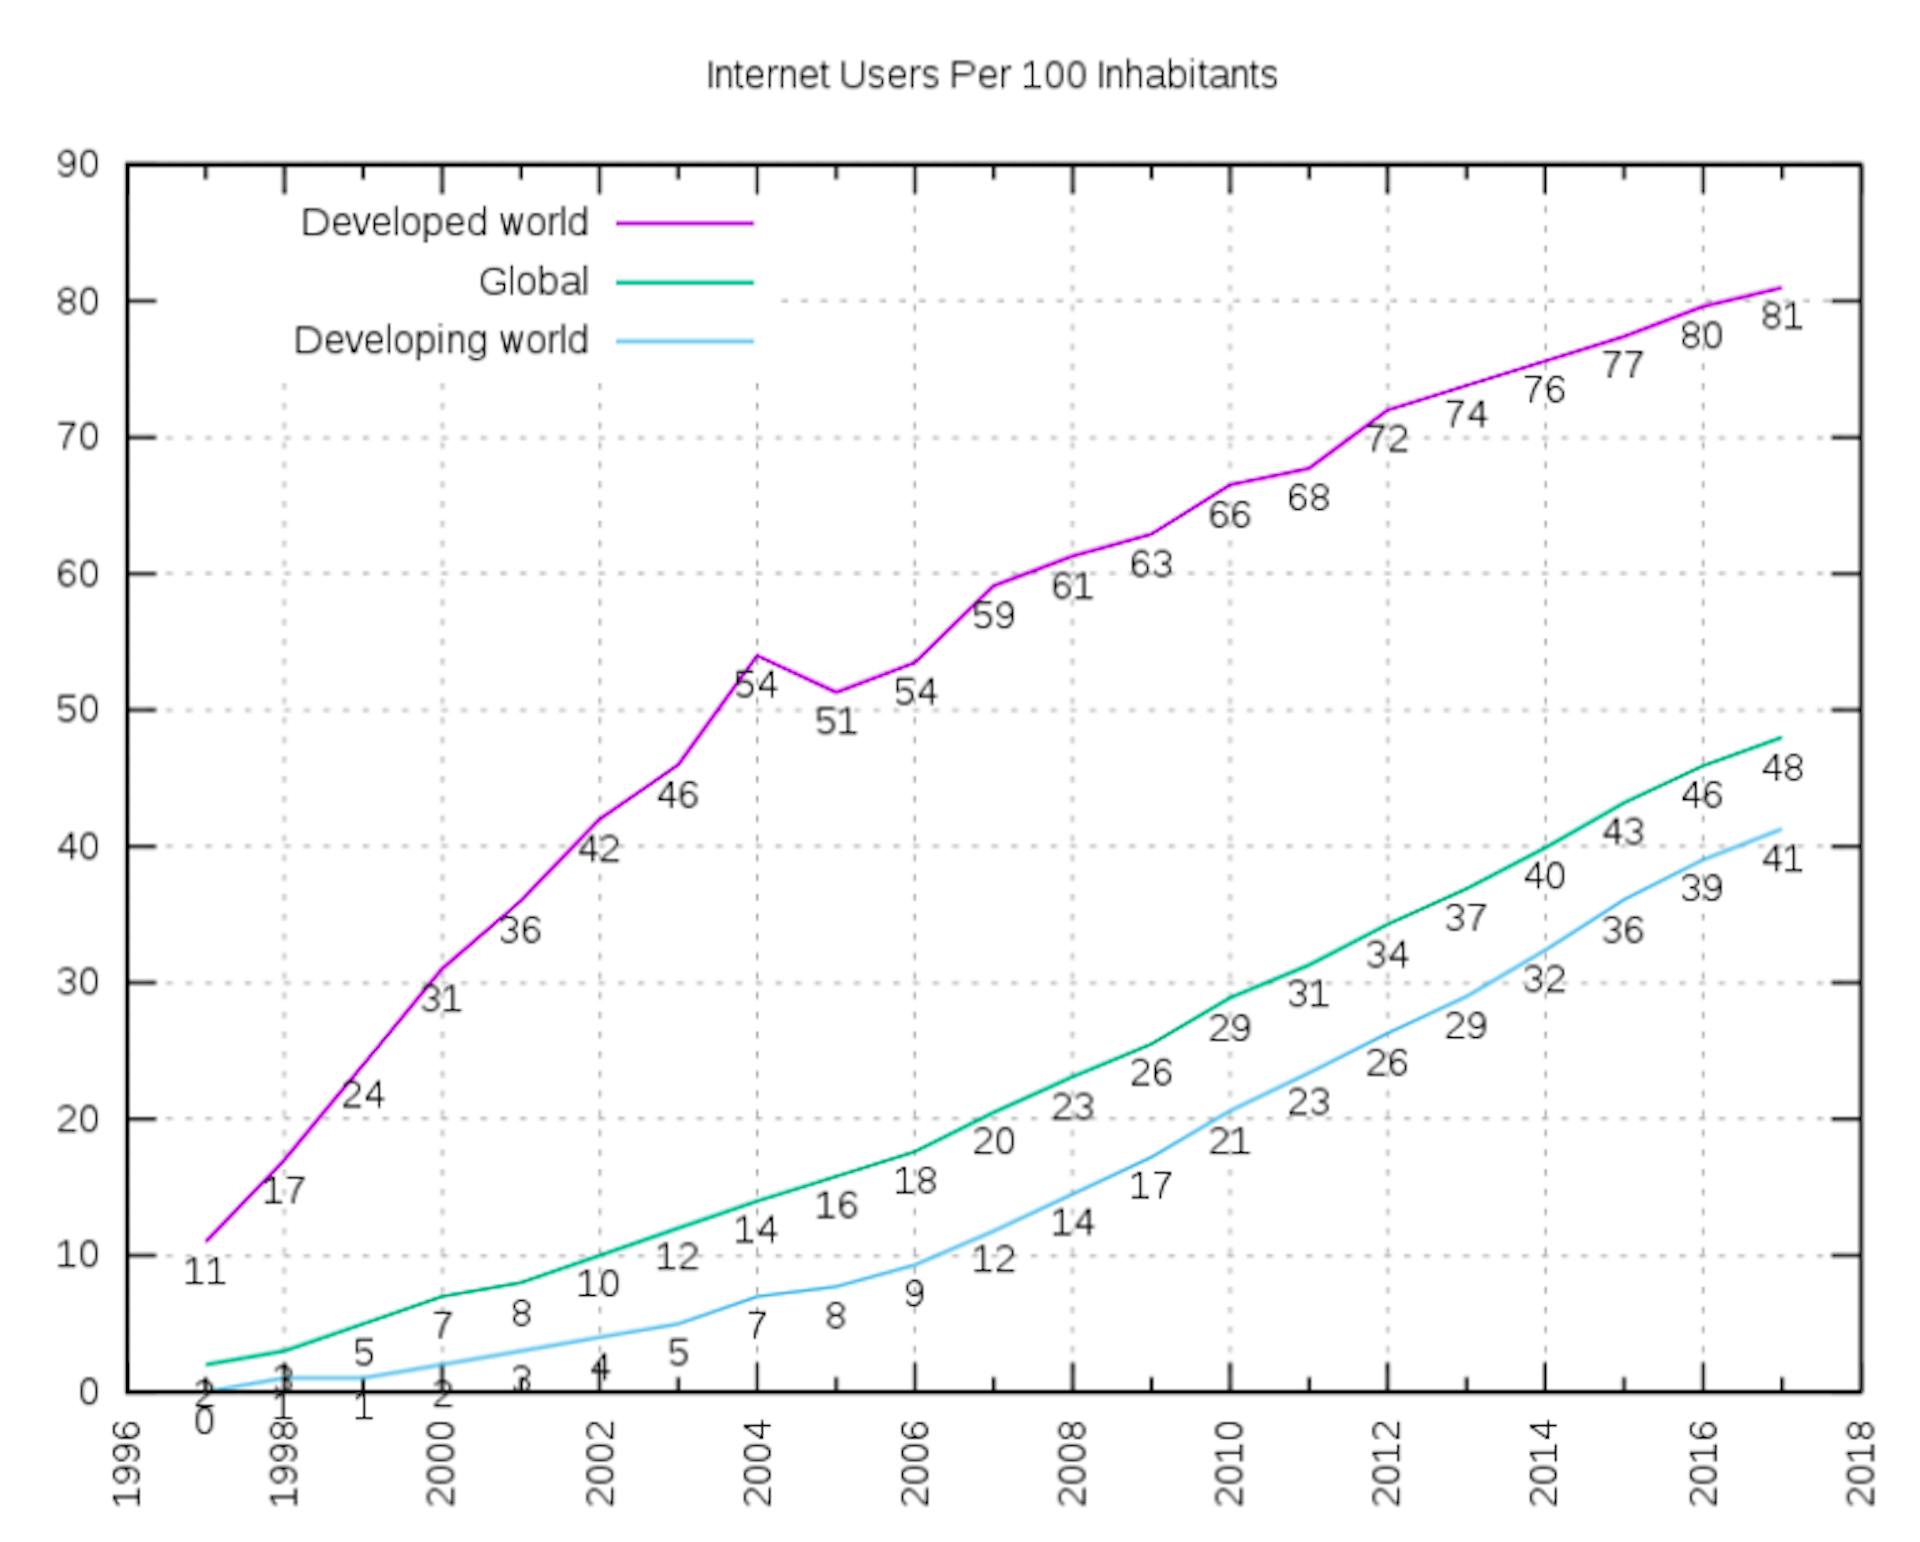 Figure-13: Source (https://en.wikipedia.org/wiki/Global_digital_divide#/media/File:Internet_users_per_100_inhabitants_ITU.svg)